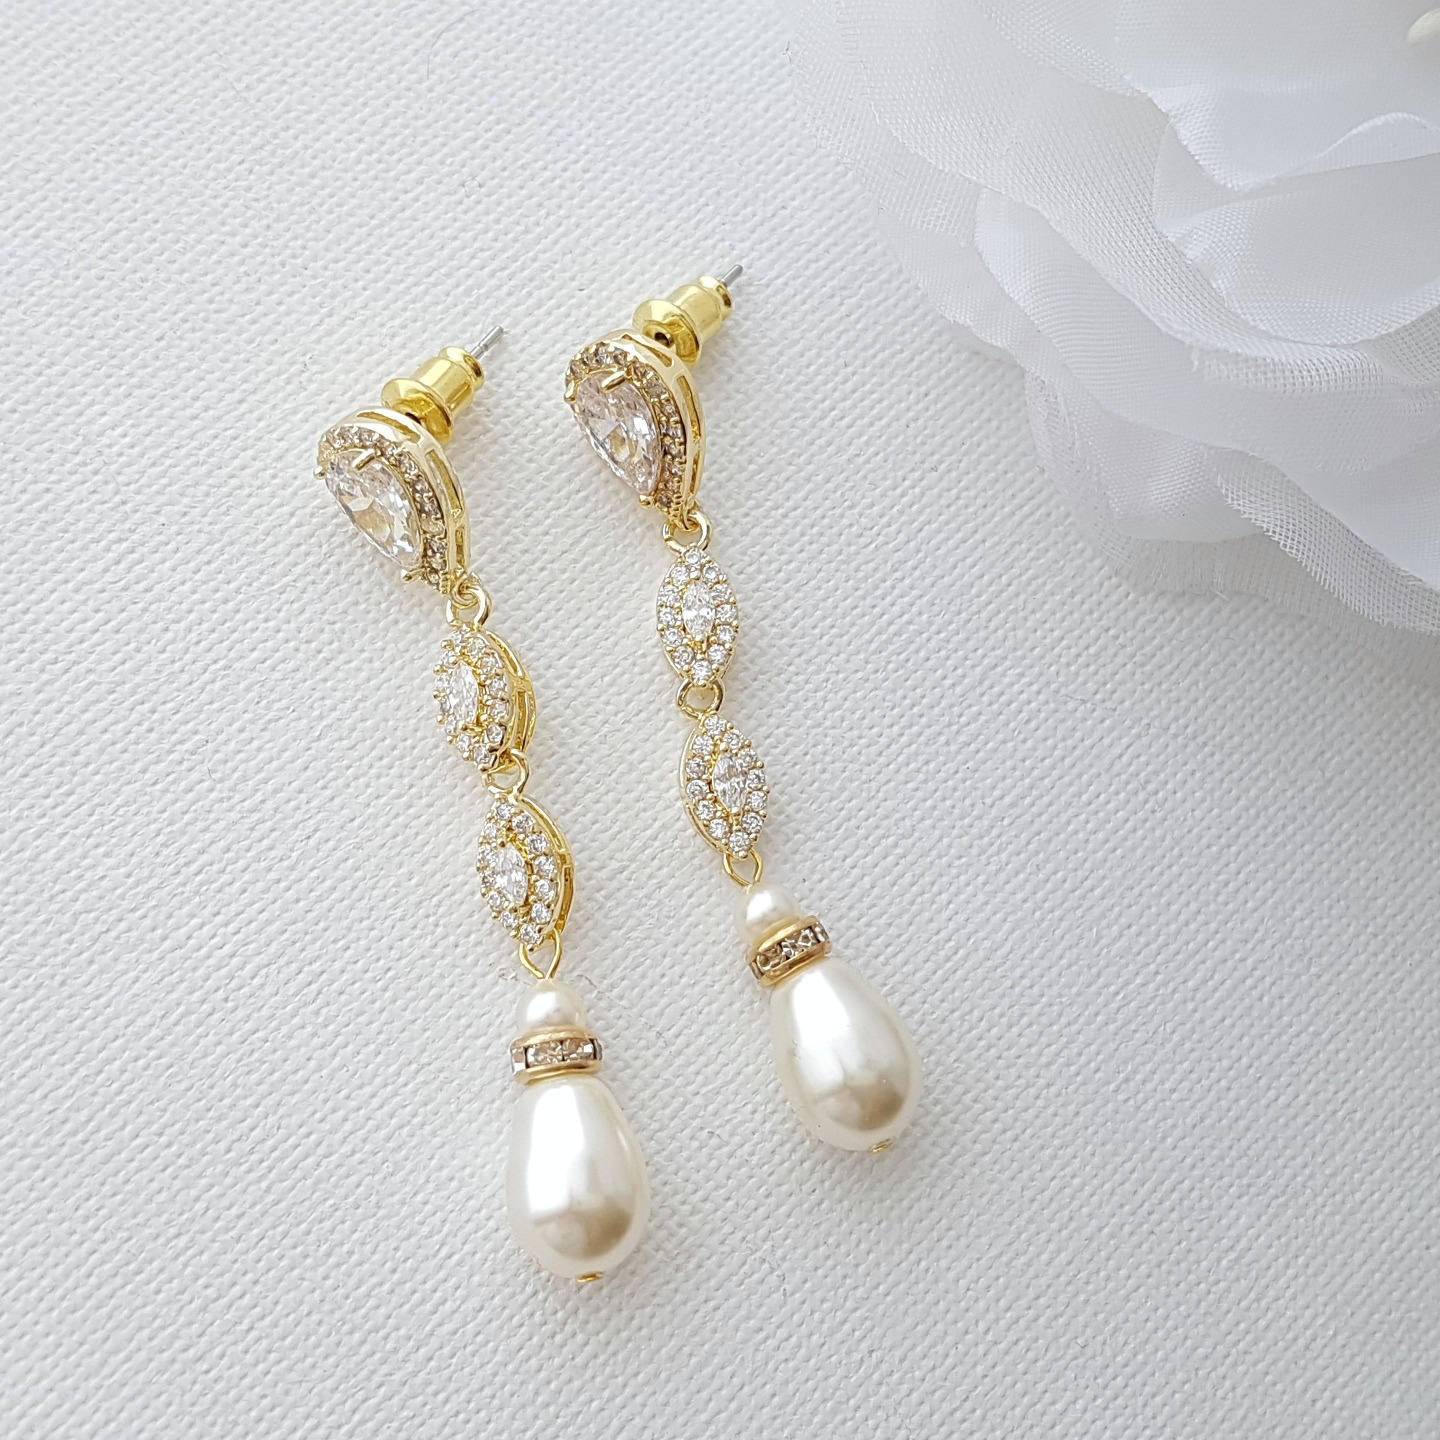 Gold drop pearl earrings wedding